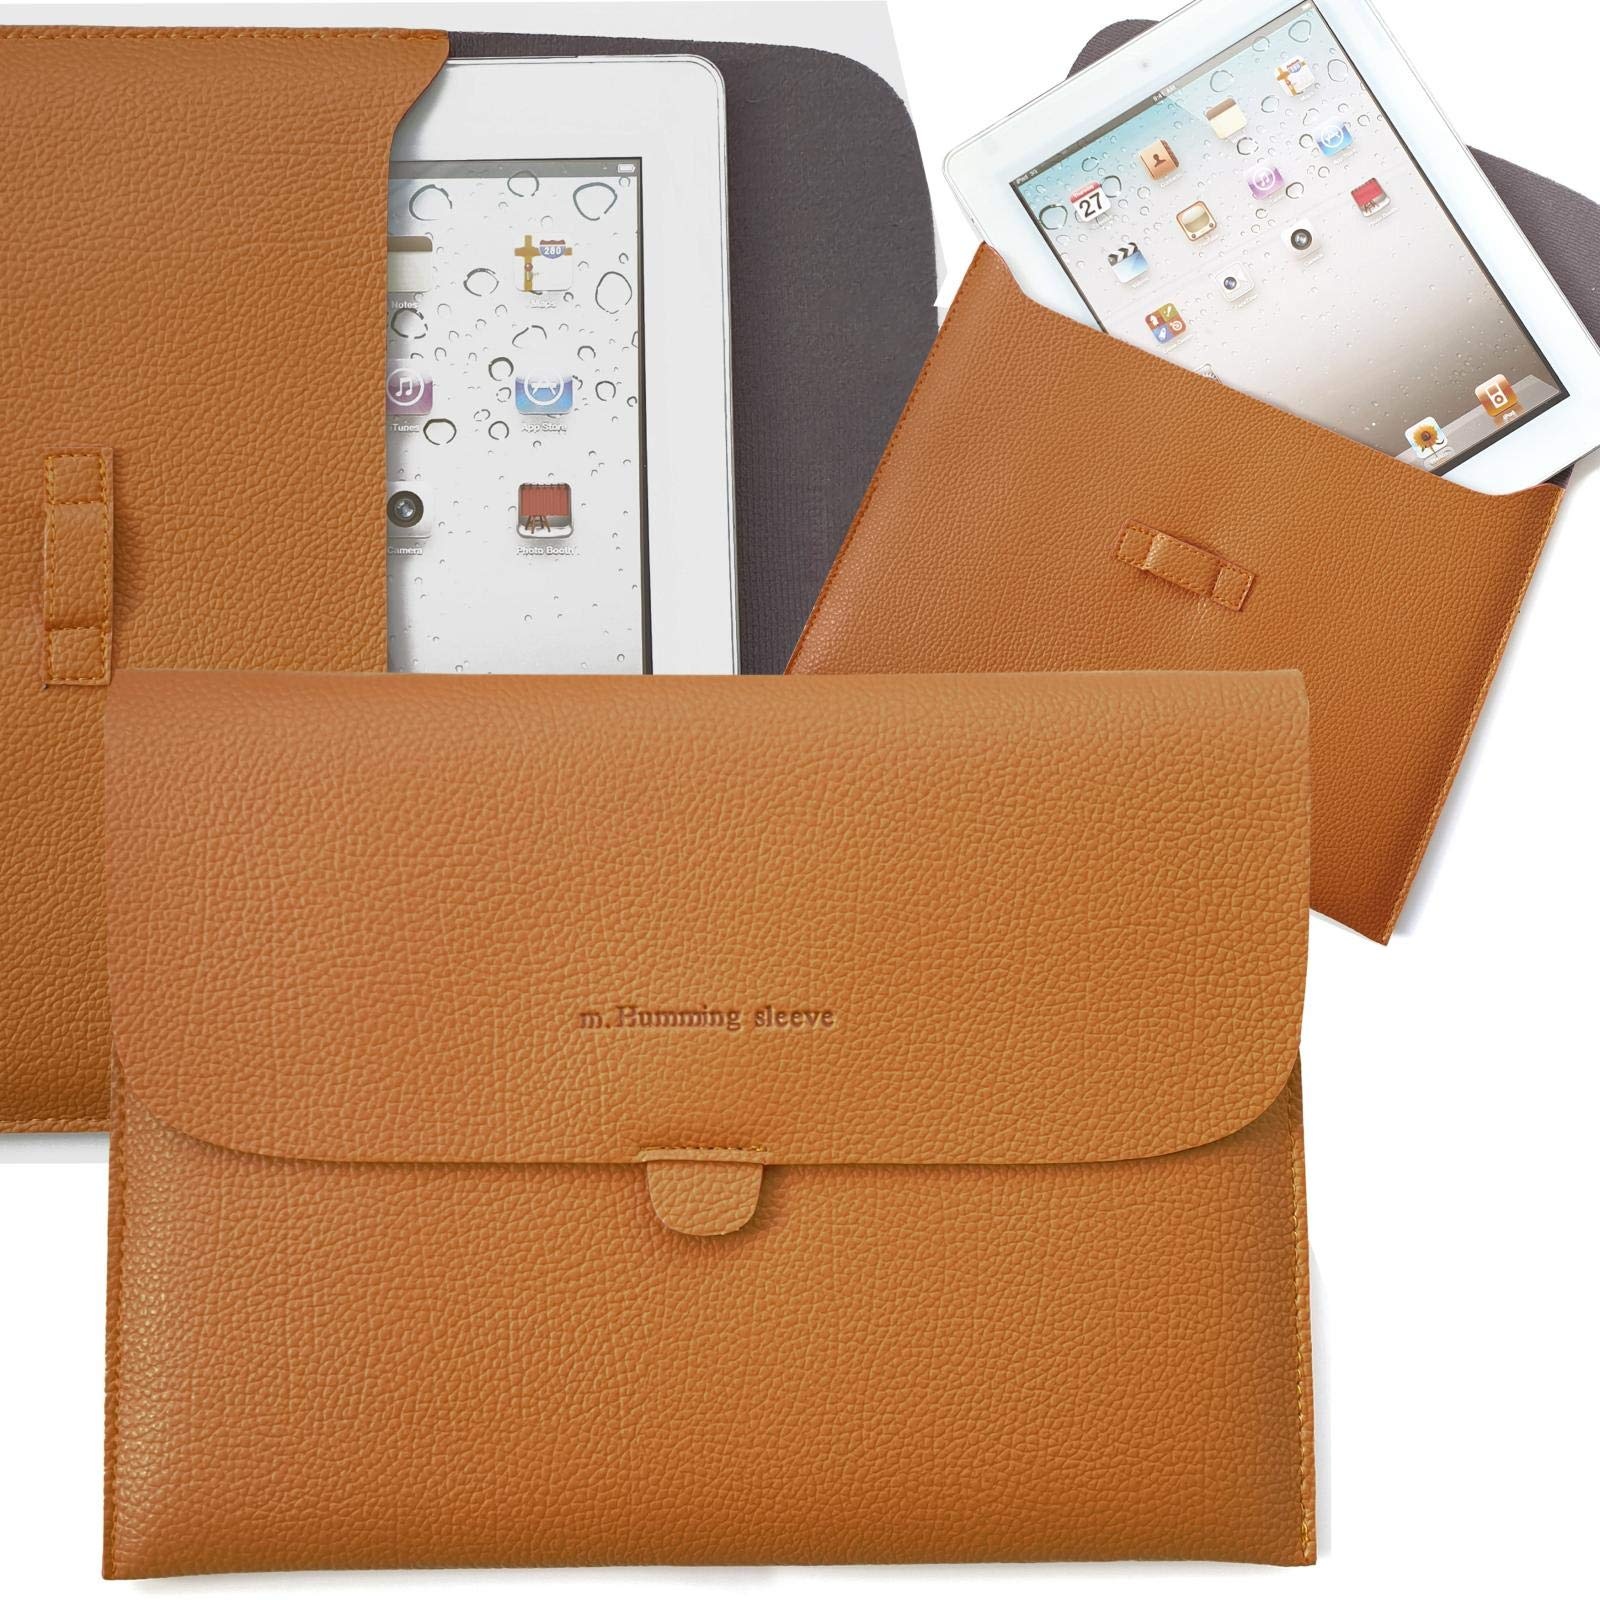 numerva Schutzhülle kompatibel mit iPad Pro 9.7 / iPad 2 3 4 / Air 2 Hülle Tablet Tasche Case Cover Braun